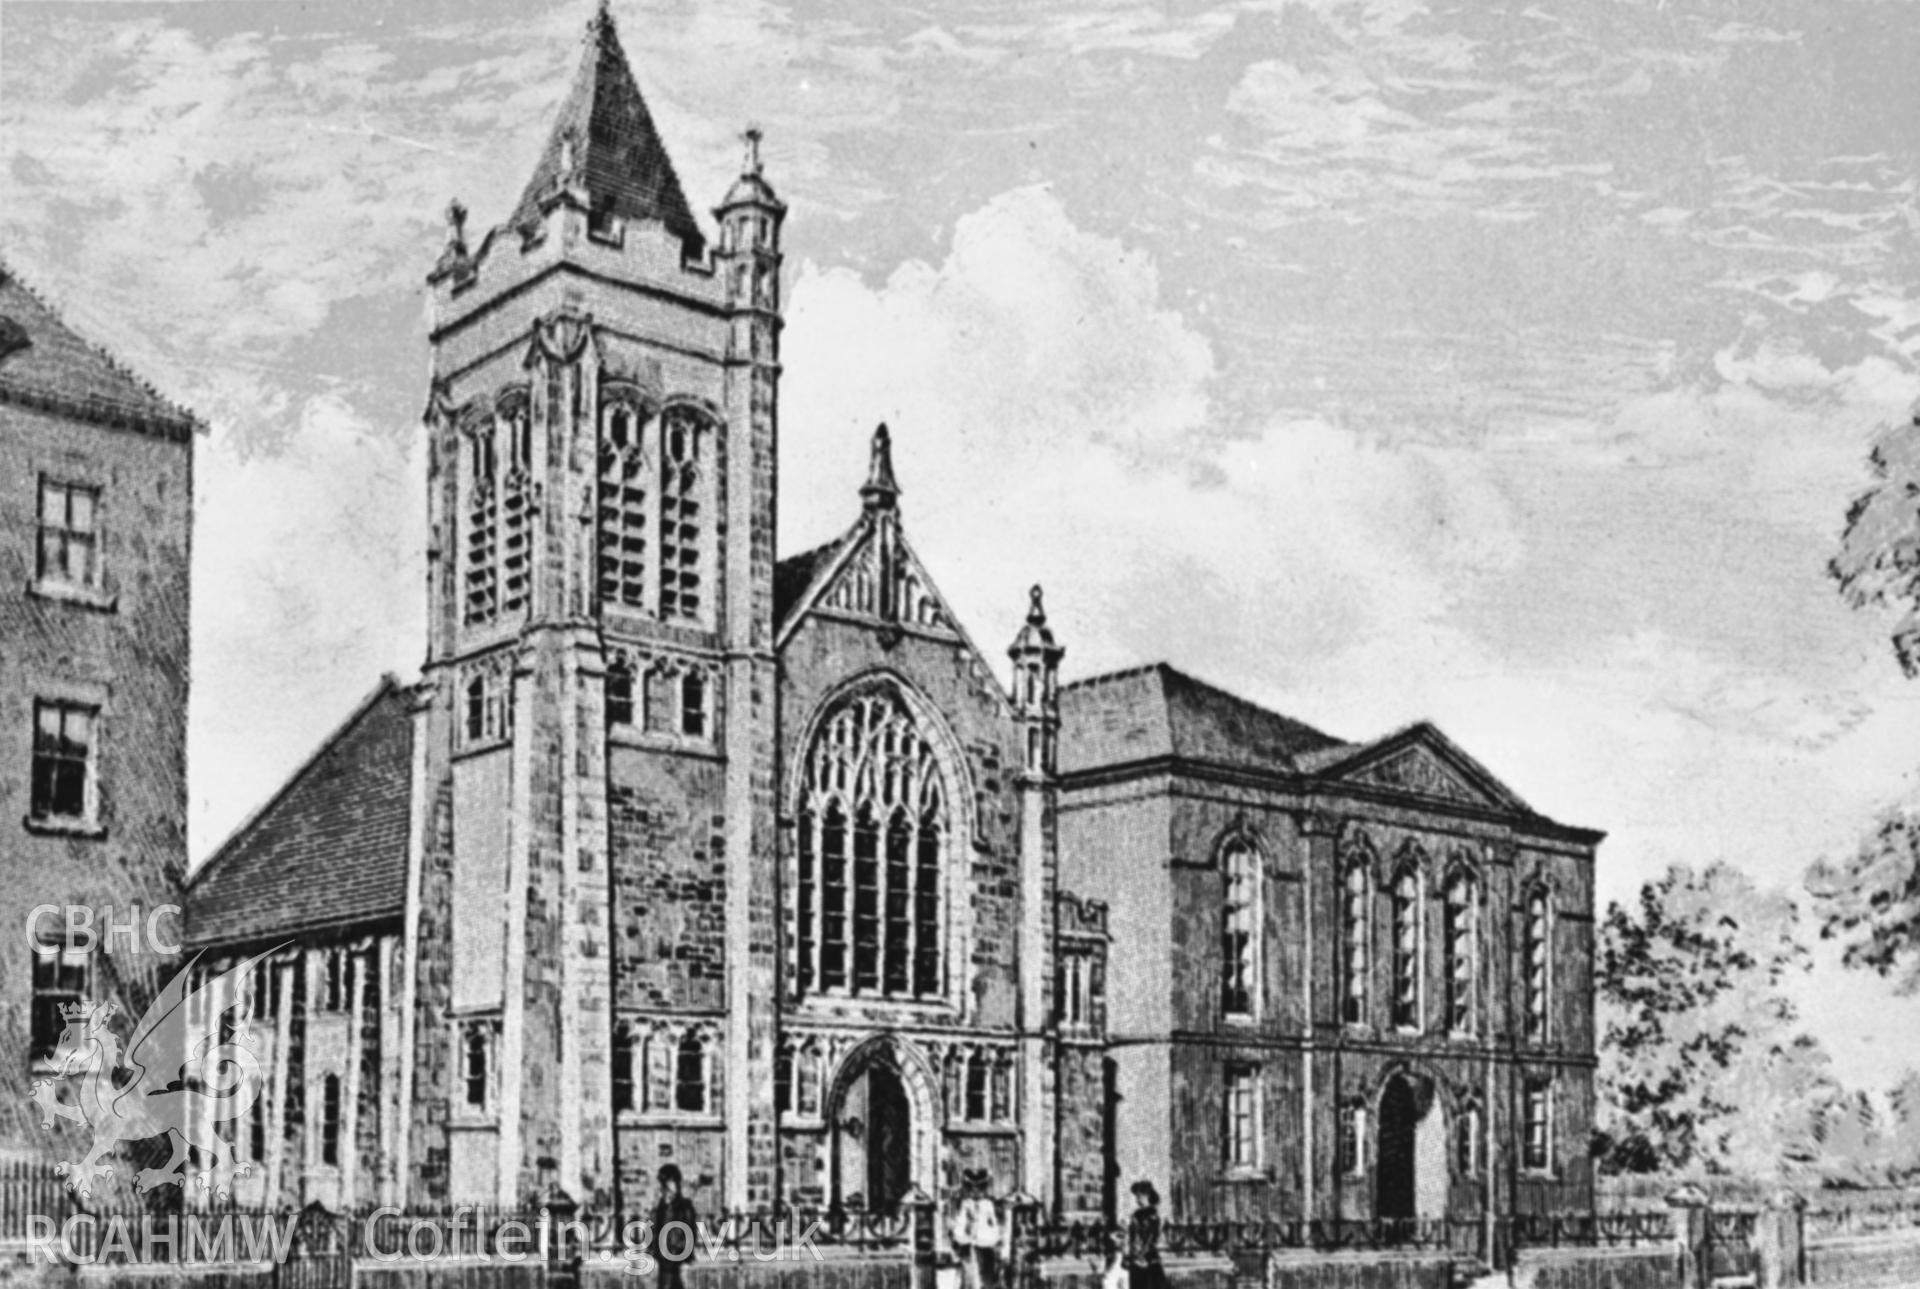 Presbyterian Church, Ithon Road, Llandrindod Wells; B&W photo copied from a c1900-1910 print in the "Welsh Spa Album" copy negative held.